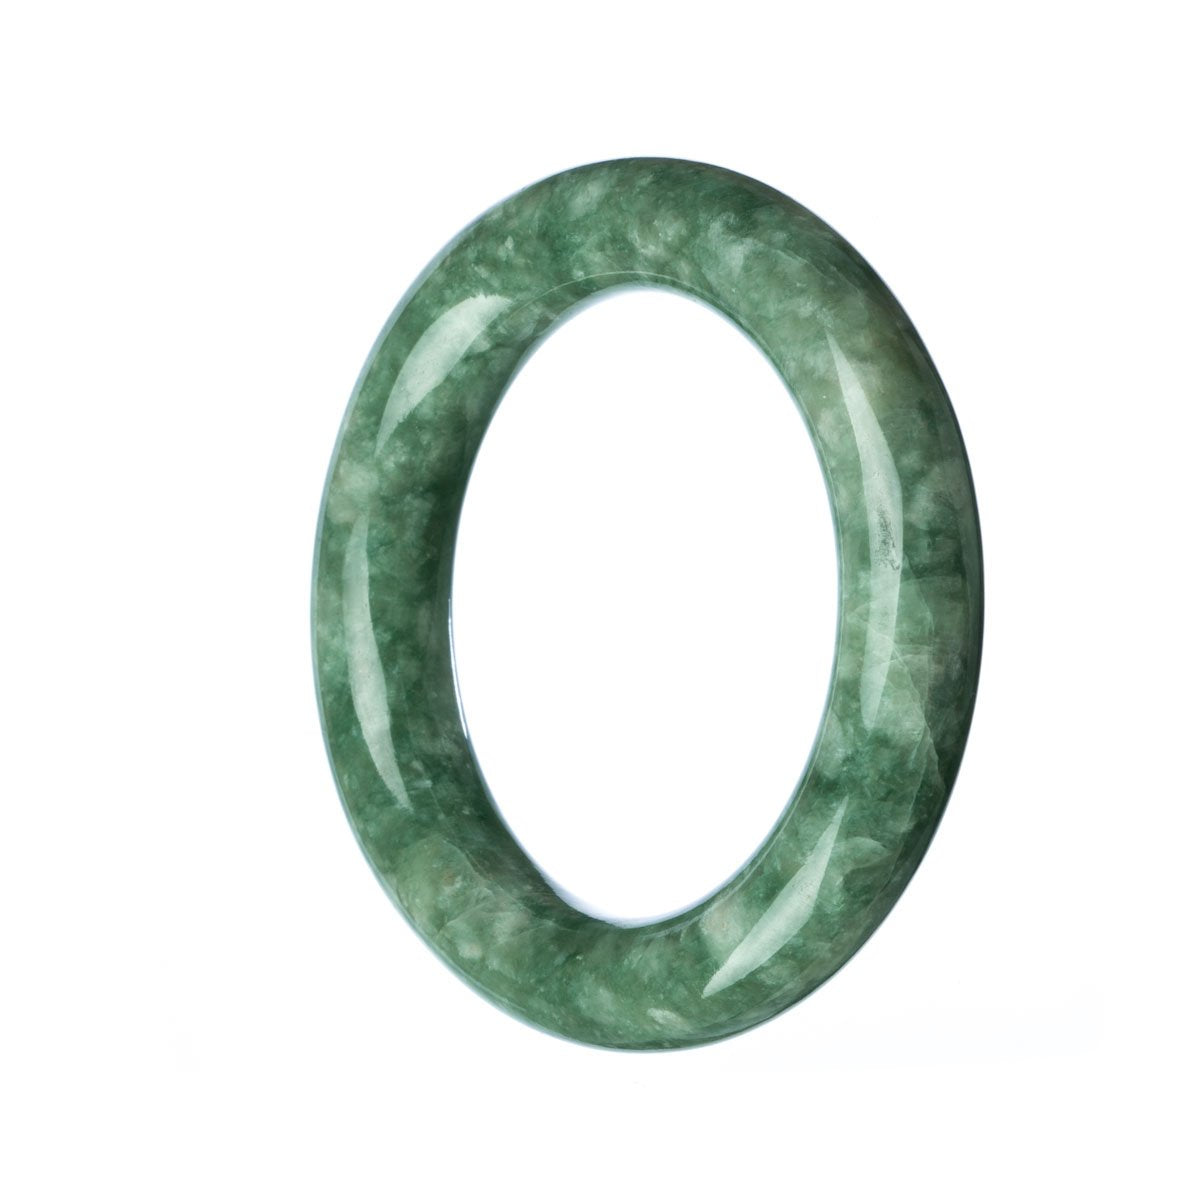 A round, 52mm genuine Grade A green jadeite jade bangle from MAYS.